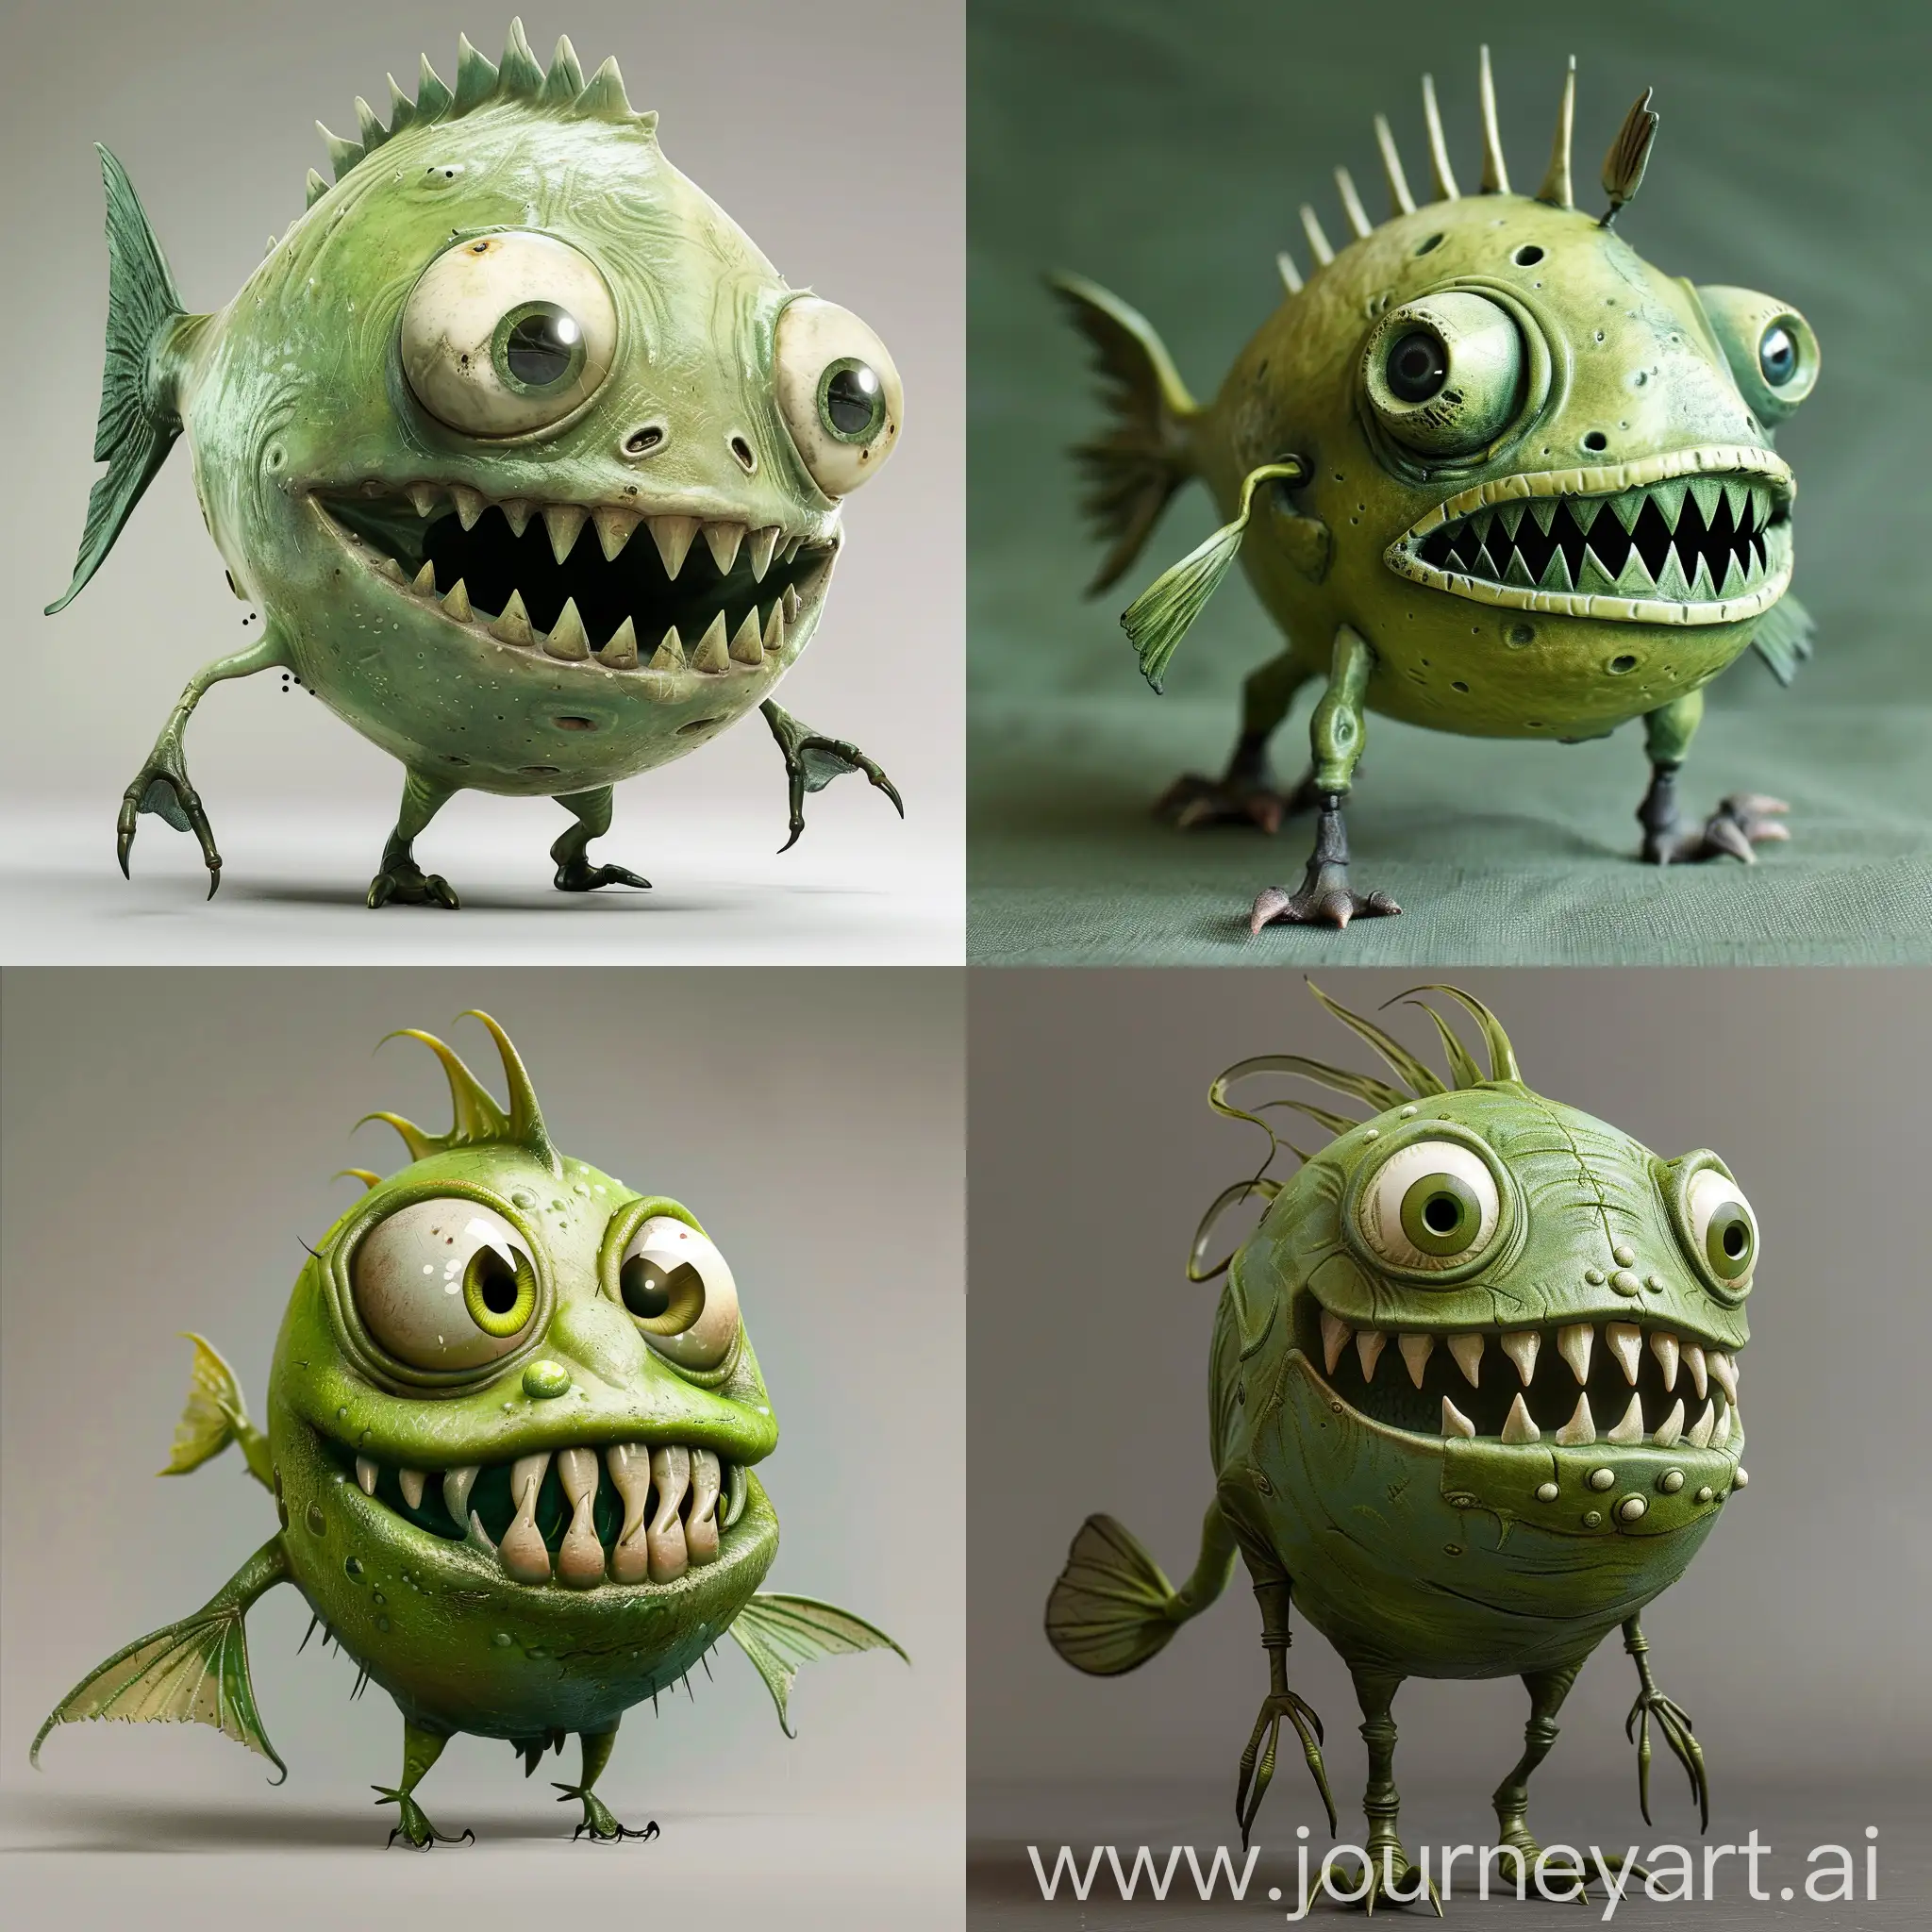 Enchanting-Green-Fish-Creature-with-Legs-and-Big-Teeth